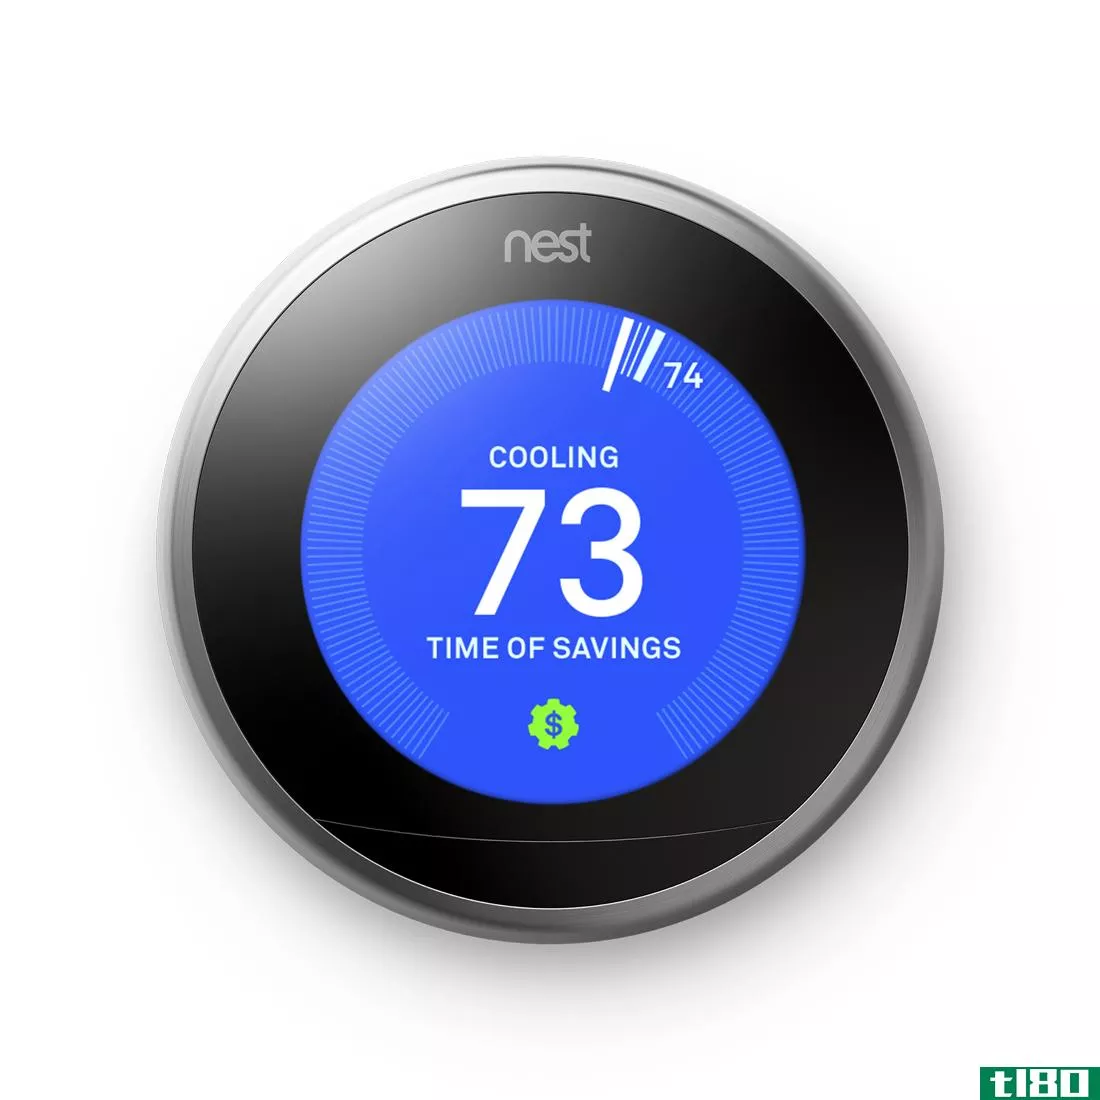 nest的恒温器现在可以根据使用时间自动调整